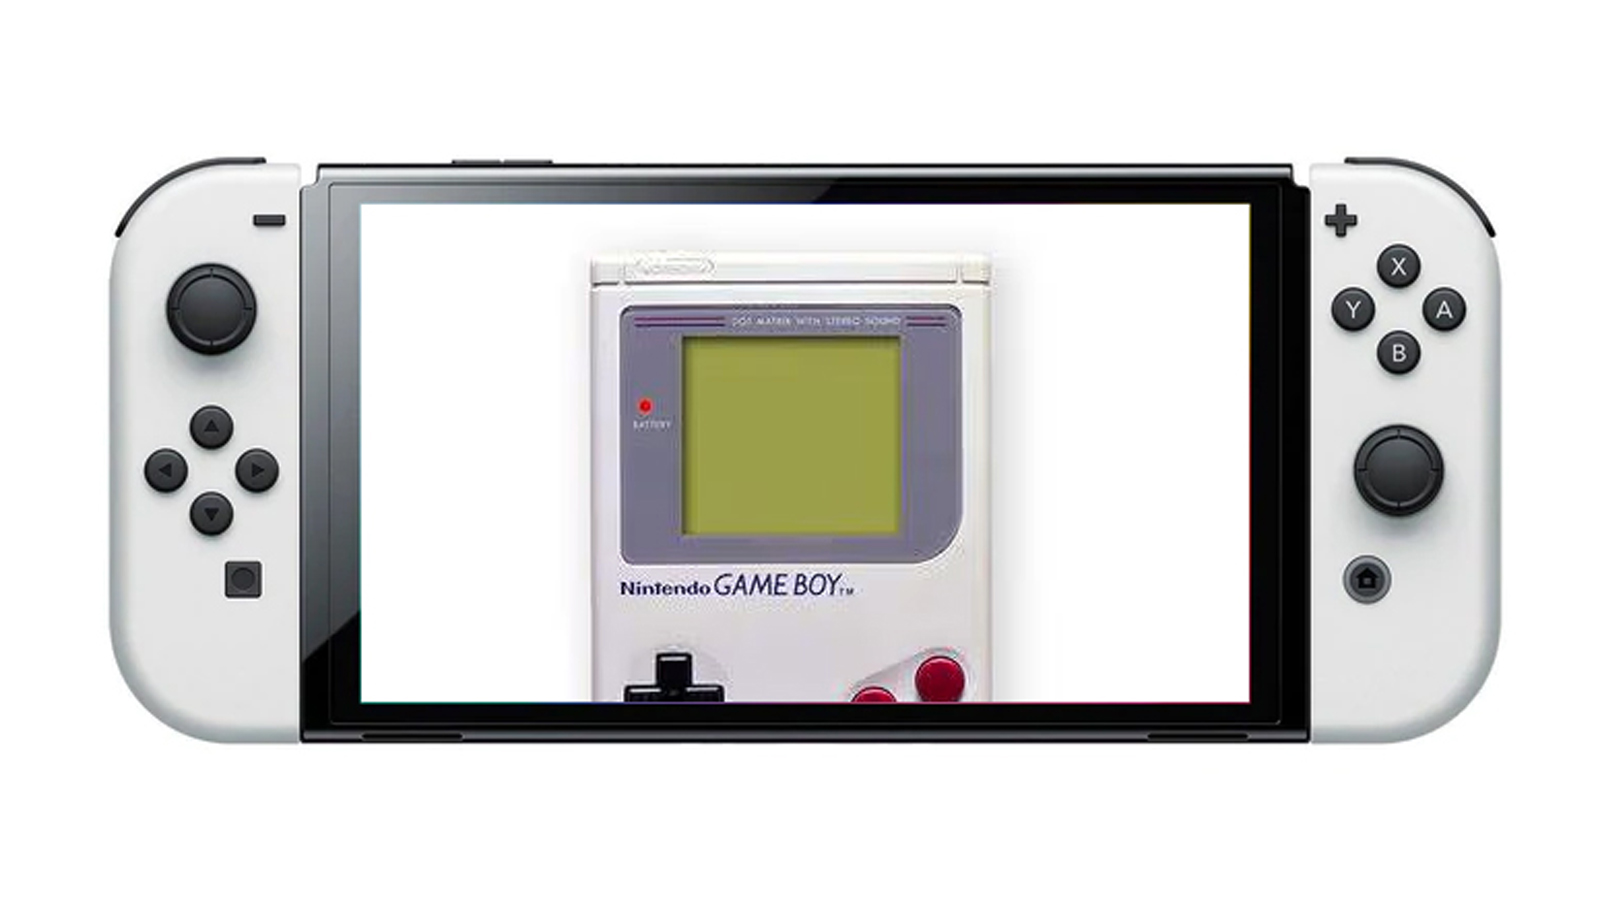 Nintendo Switch Online Game Boy emulator reportedly leaked